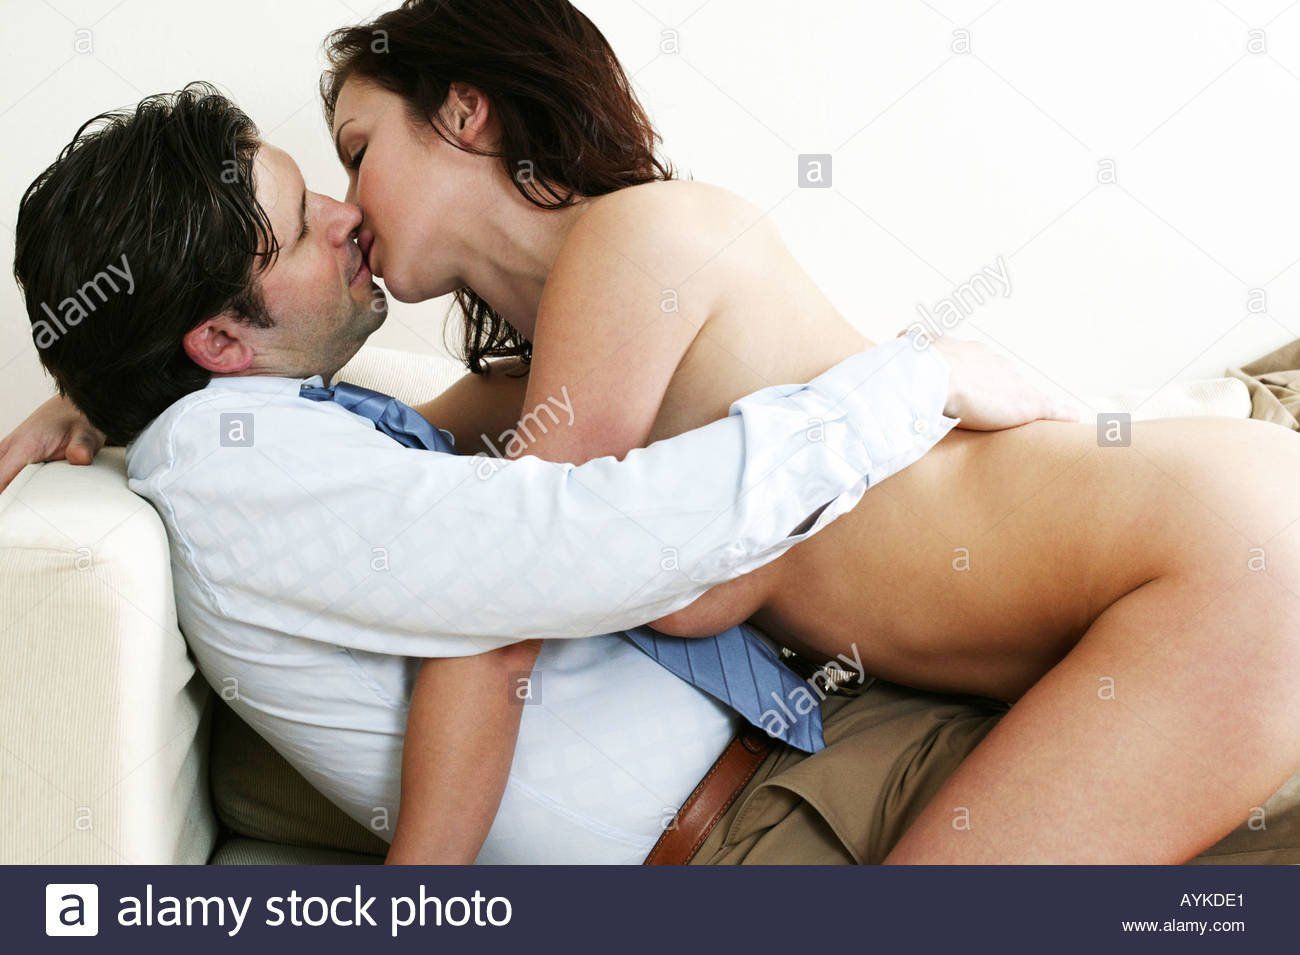 Lick Girl Breast When Having Sex